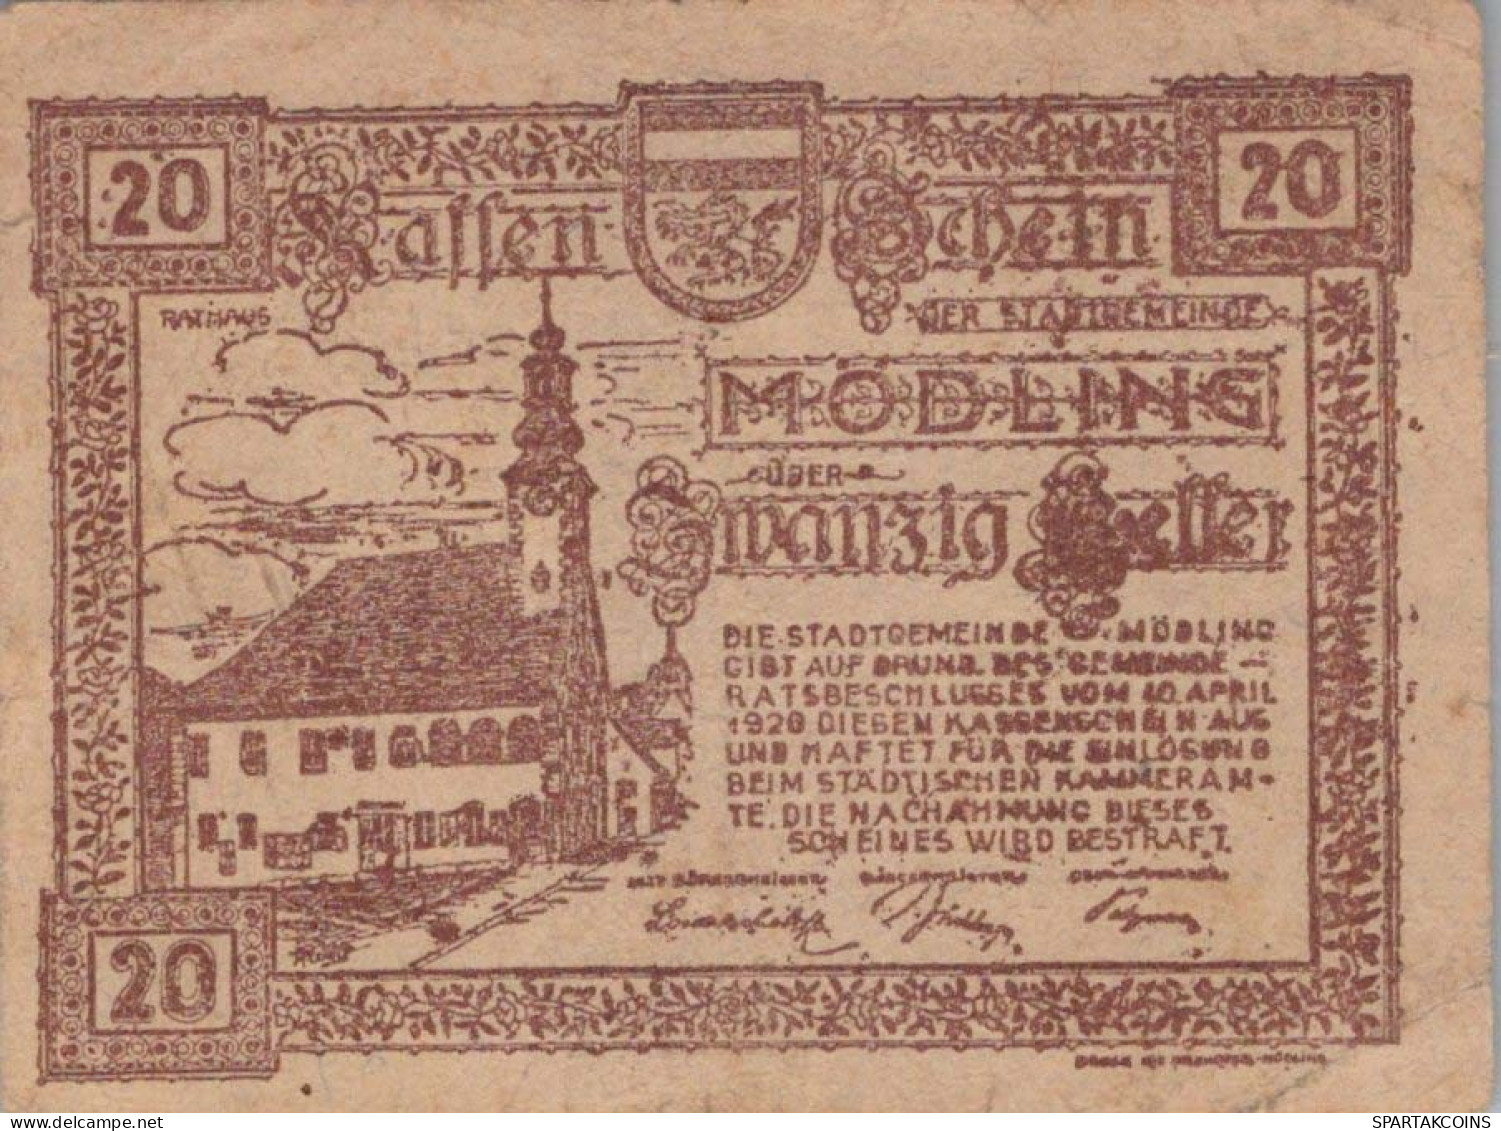 20 HELLER 1920 Stadt MoDLING Niedrigeren Österreich Notgeld Banknote #PD808 - [11] Local Banknote Issues